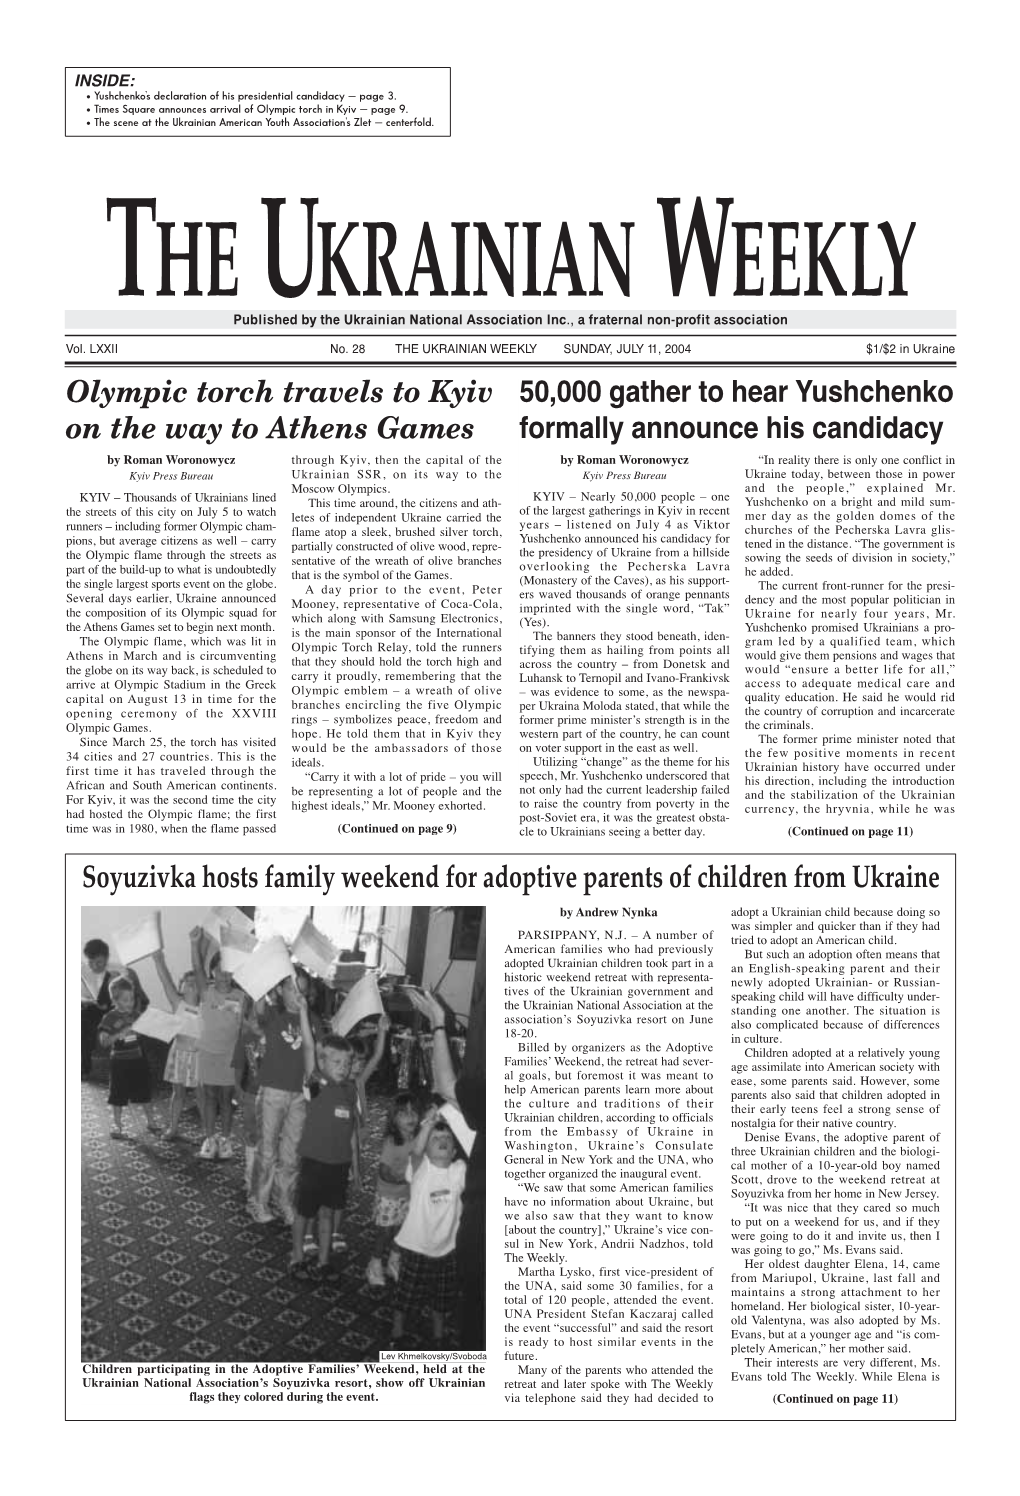 The Ukrainian Weekly 2004, No.28